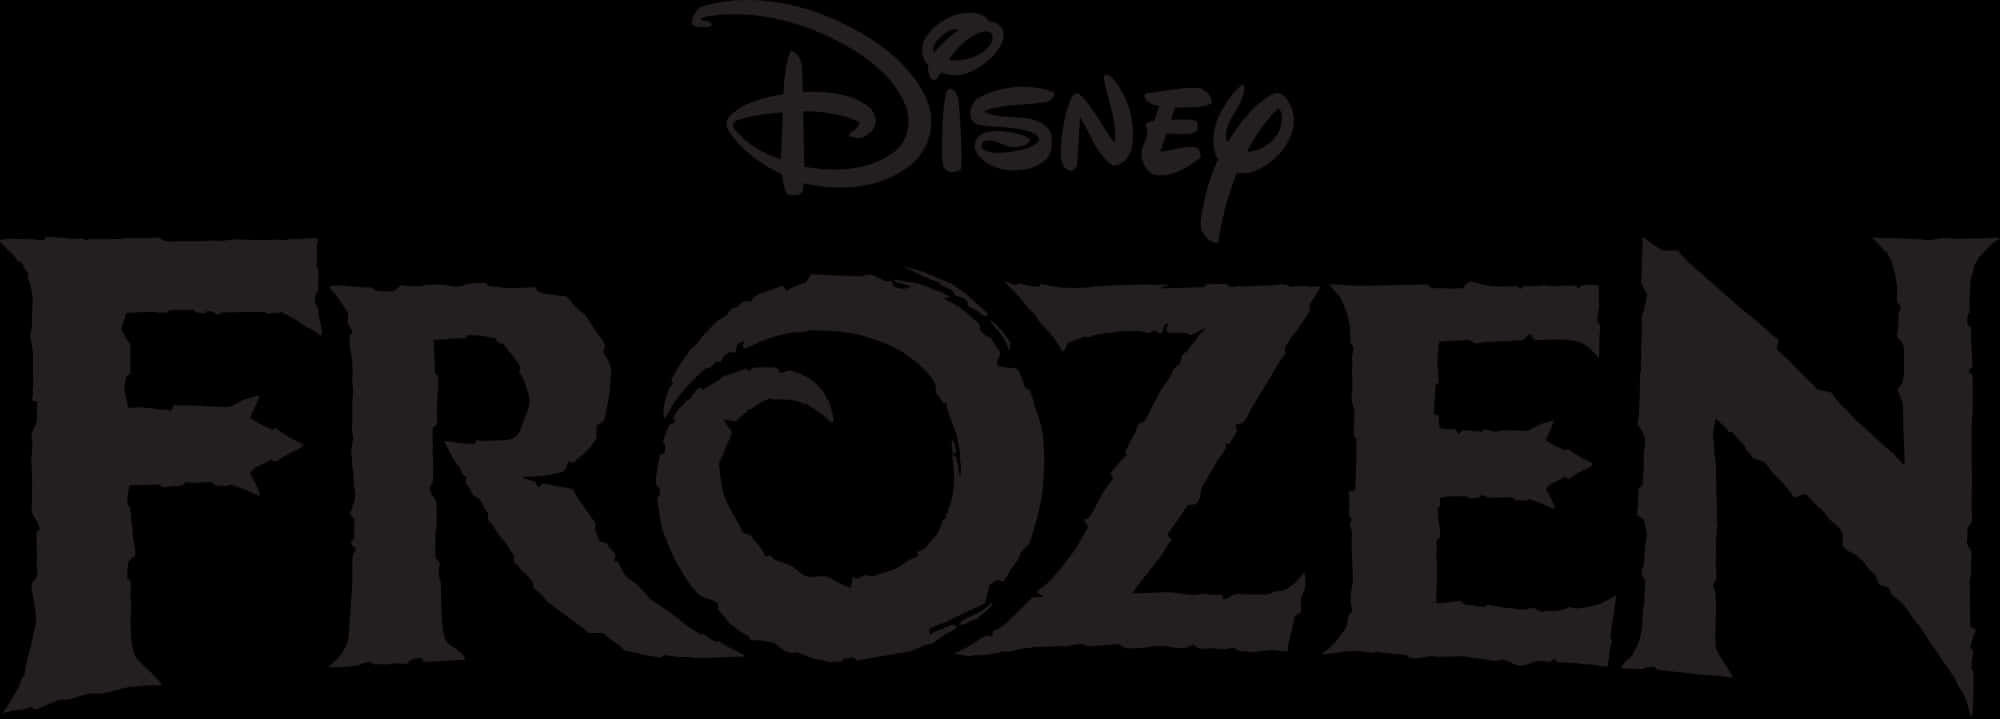 Disney Frozen Logo Black Background PNG